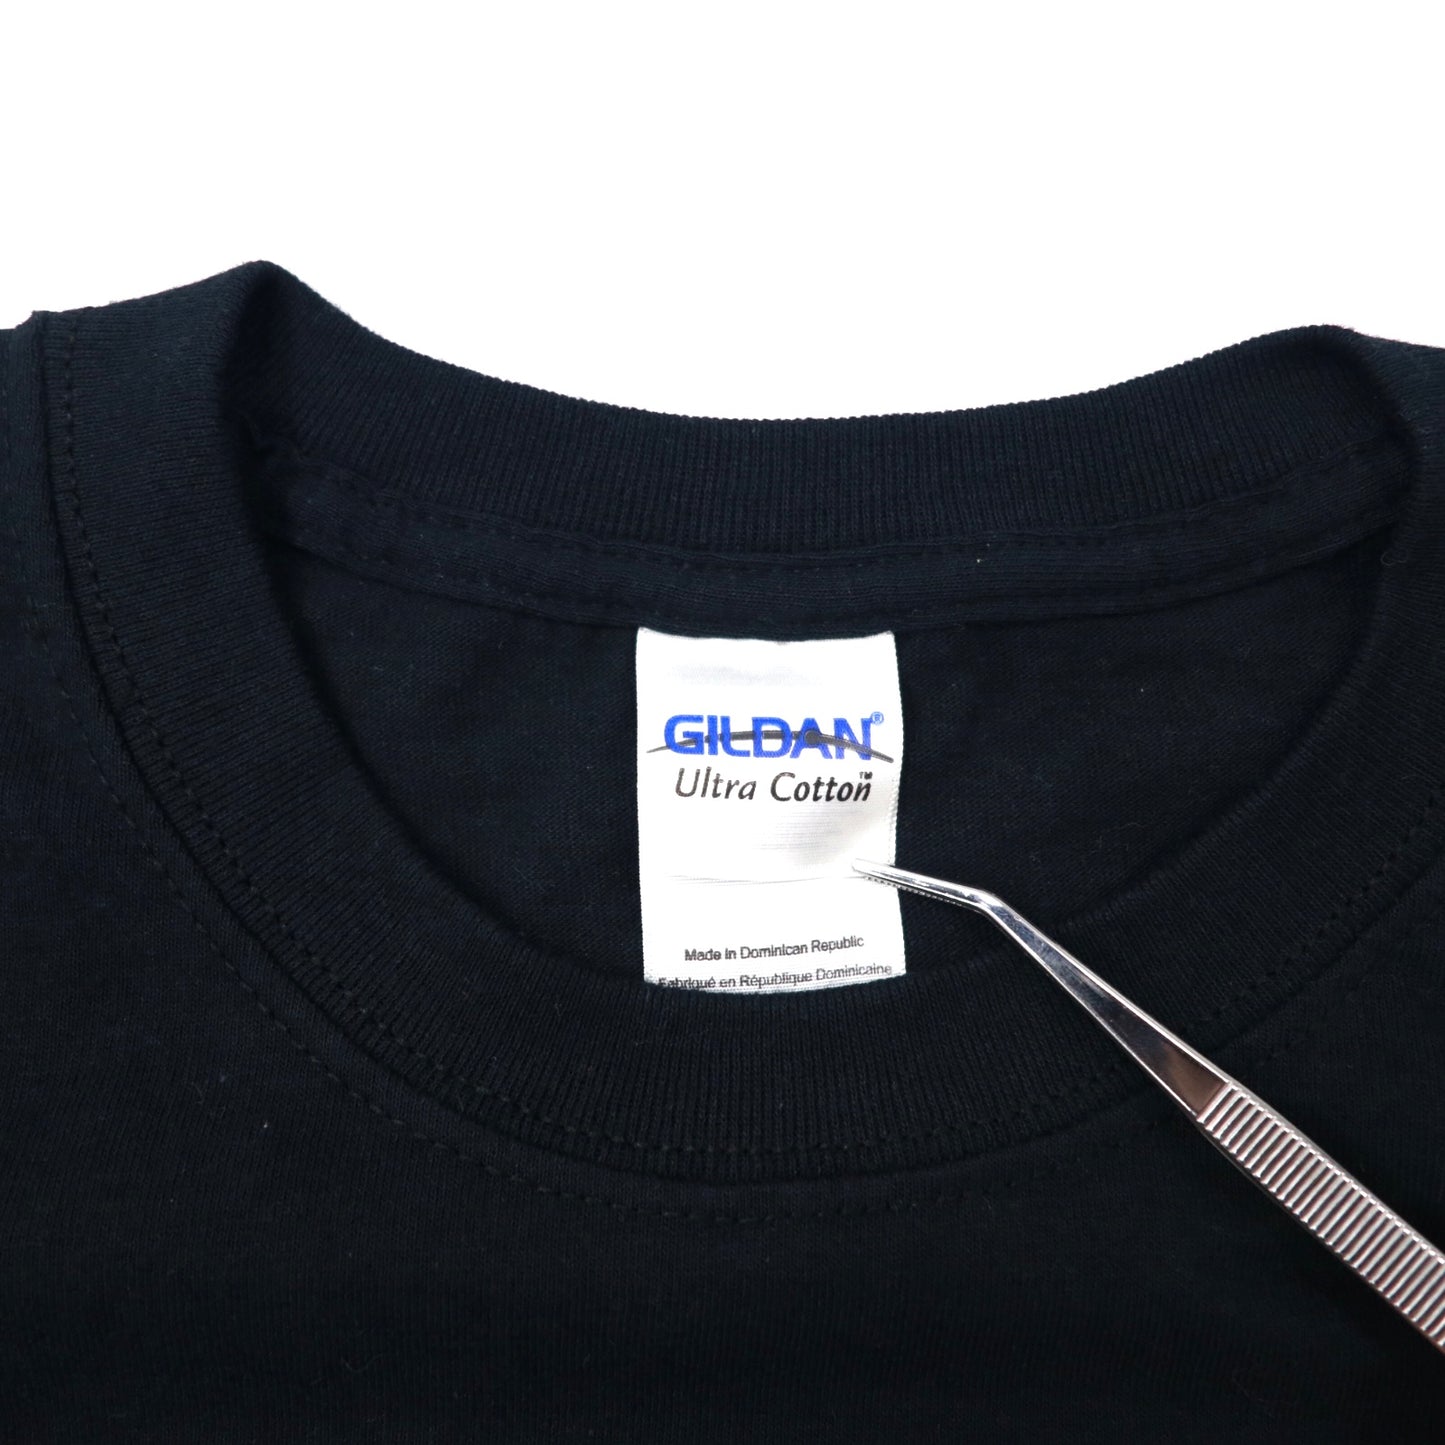 GILDAN バンドTシャツ L ブラック IRON MAIDEN 2016 両国国技館 日本限定発売